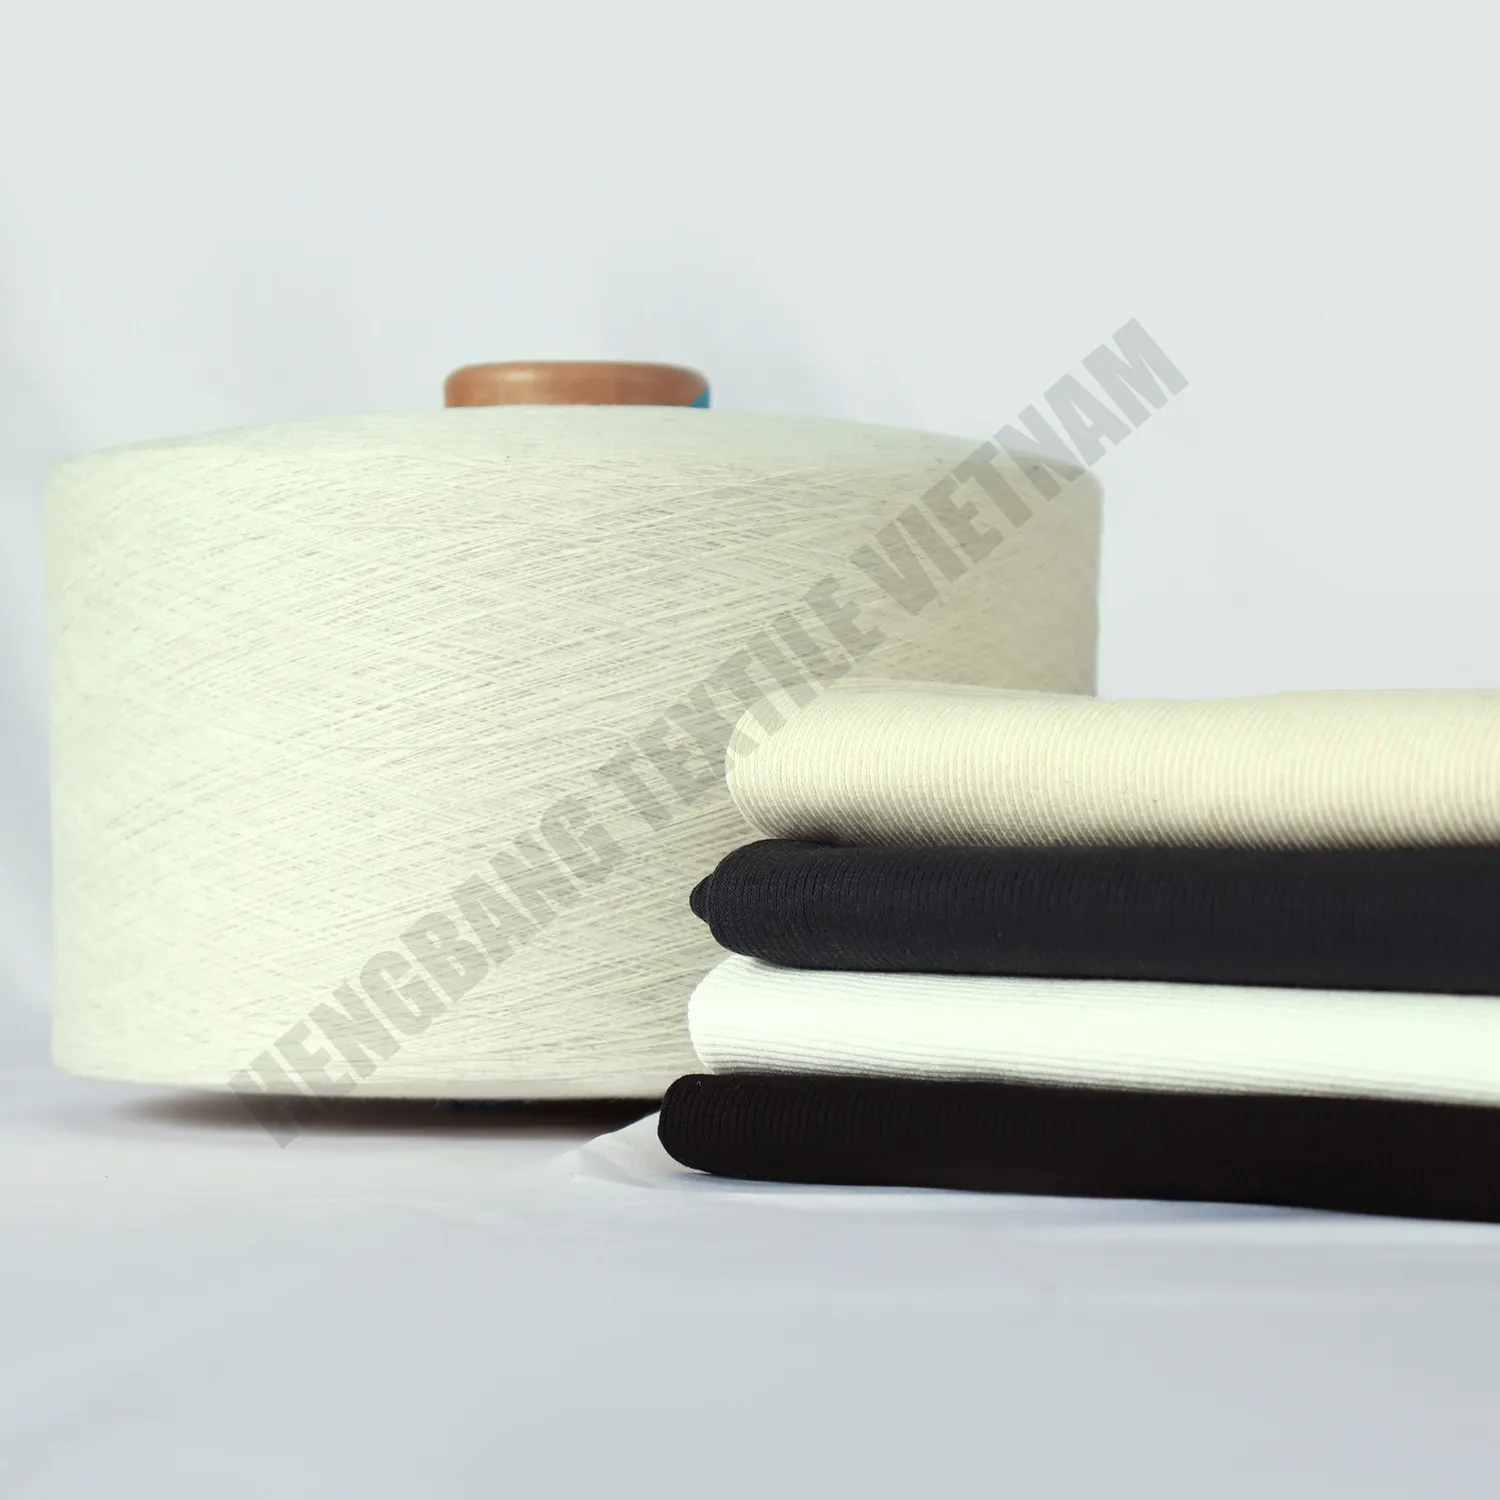 Kaliteli düz boyalı örgü TC ribana kumaş, moda pamuk Polyester tayt malzeme 2x 2 ribana kumaş